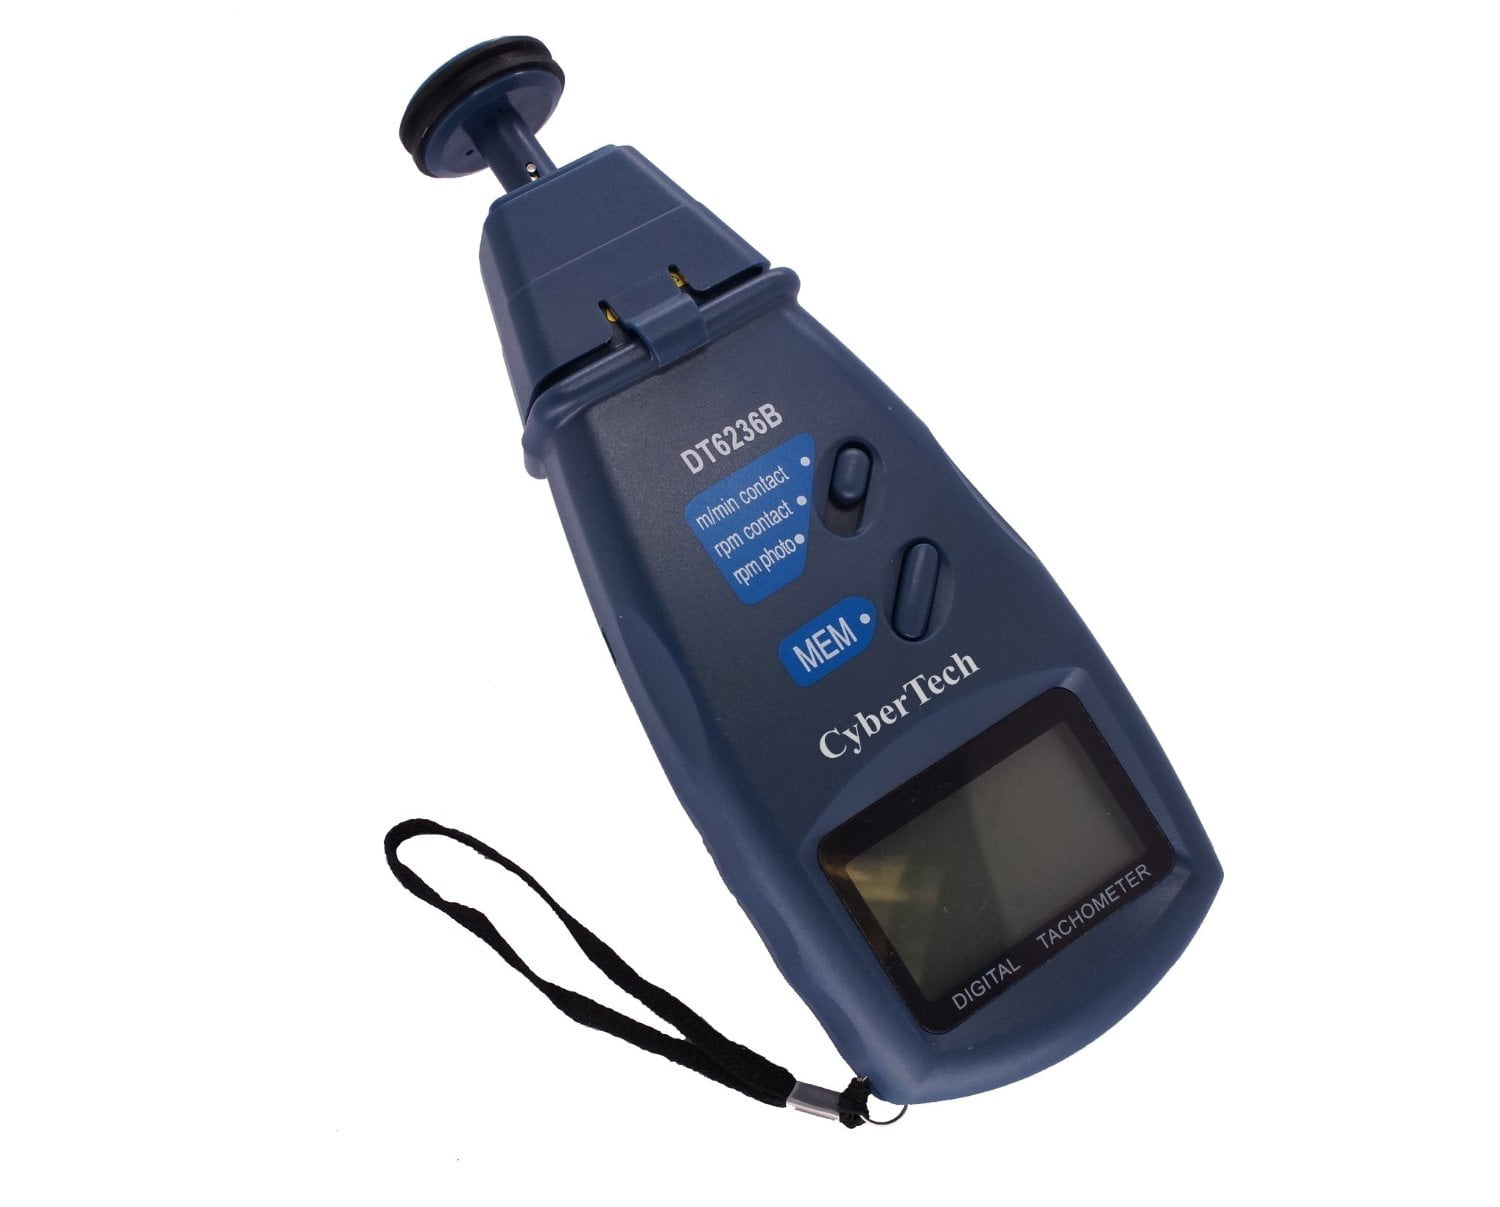 Contact Tachometer Smart Sensor 0.5 19999 Digital Rotation With Lcd Backlight Display Rpm Meter